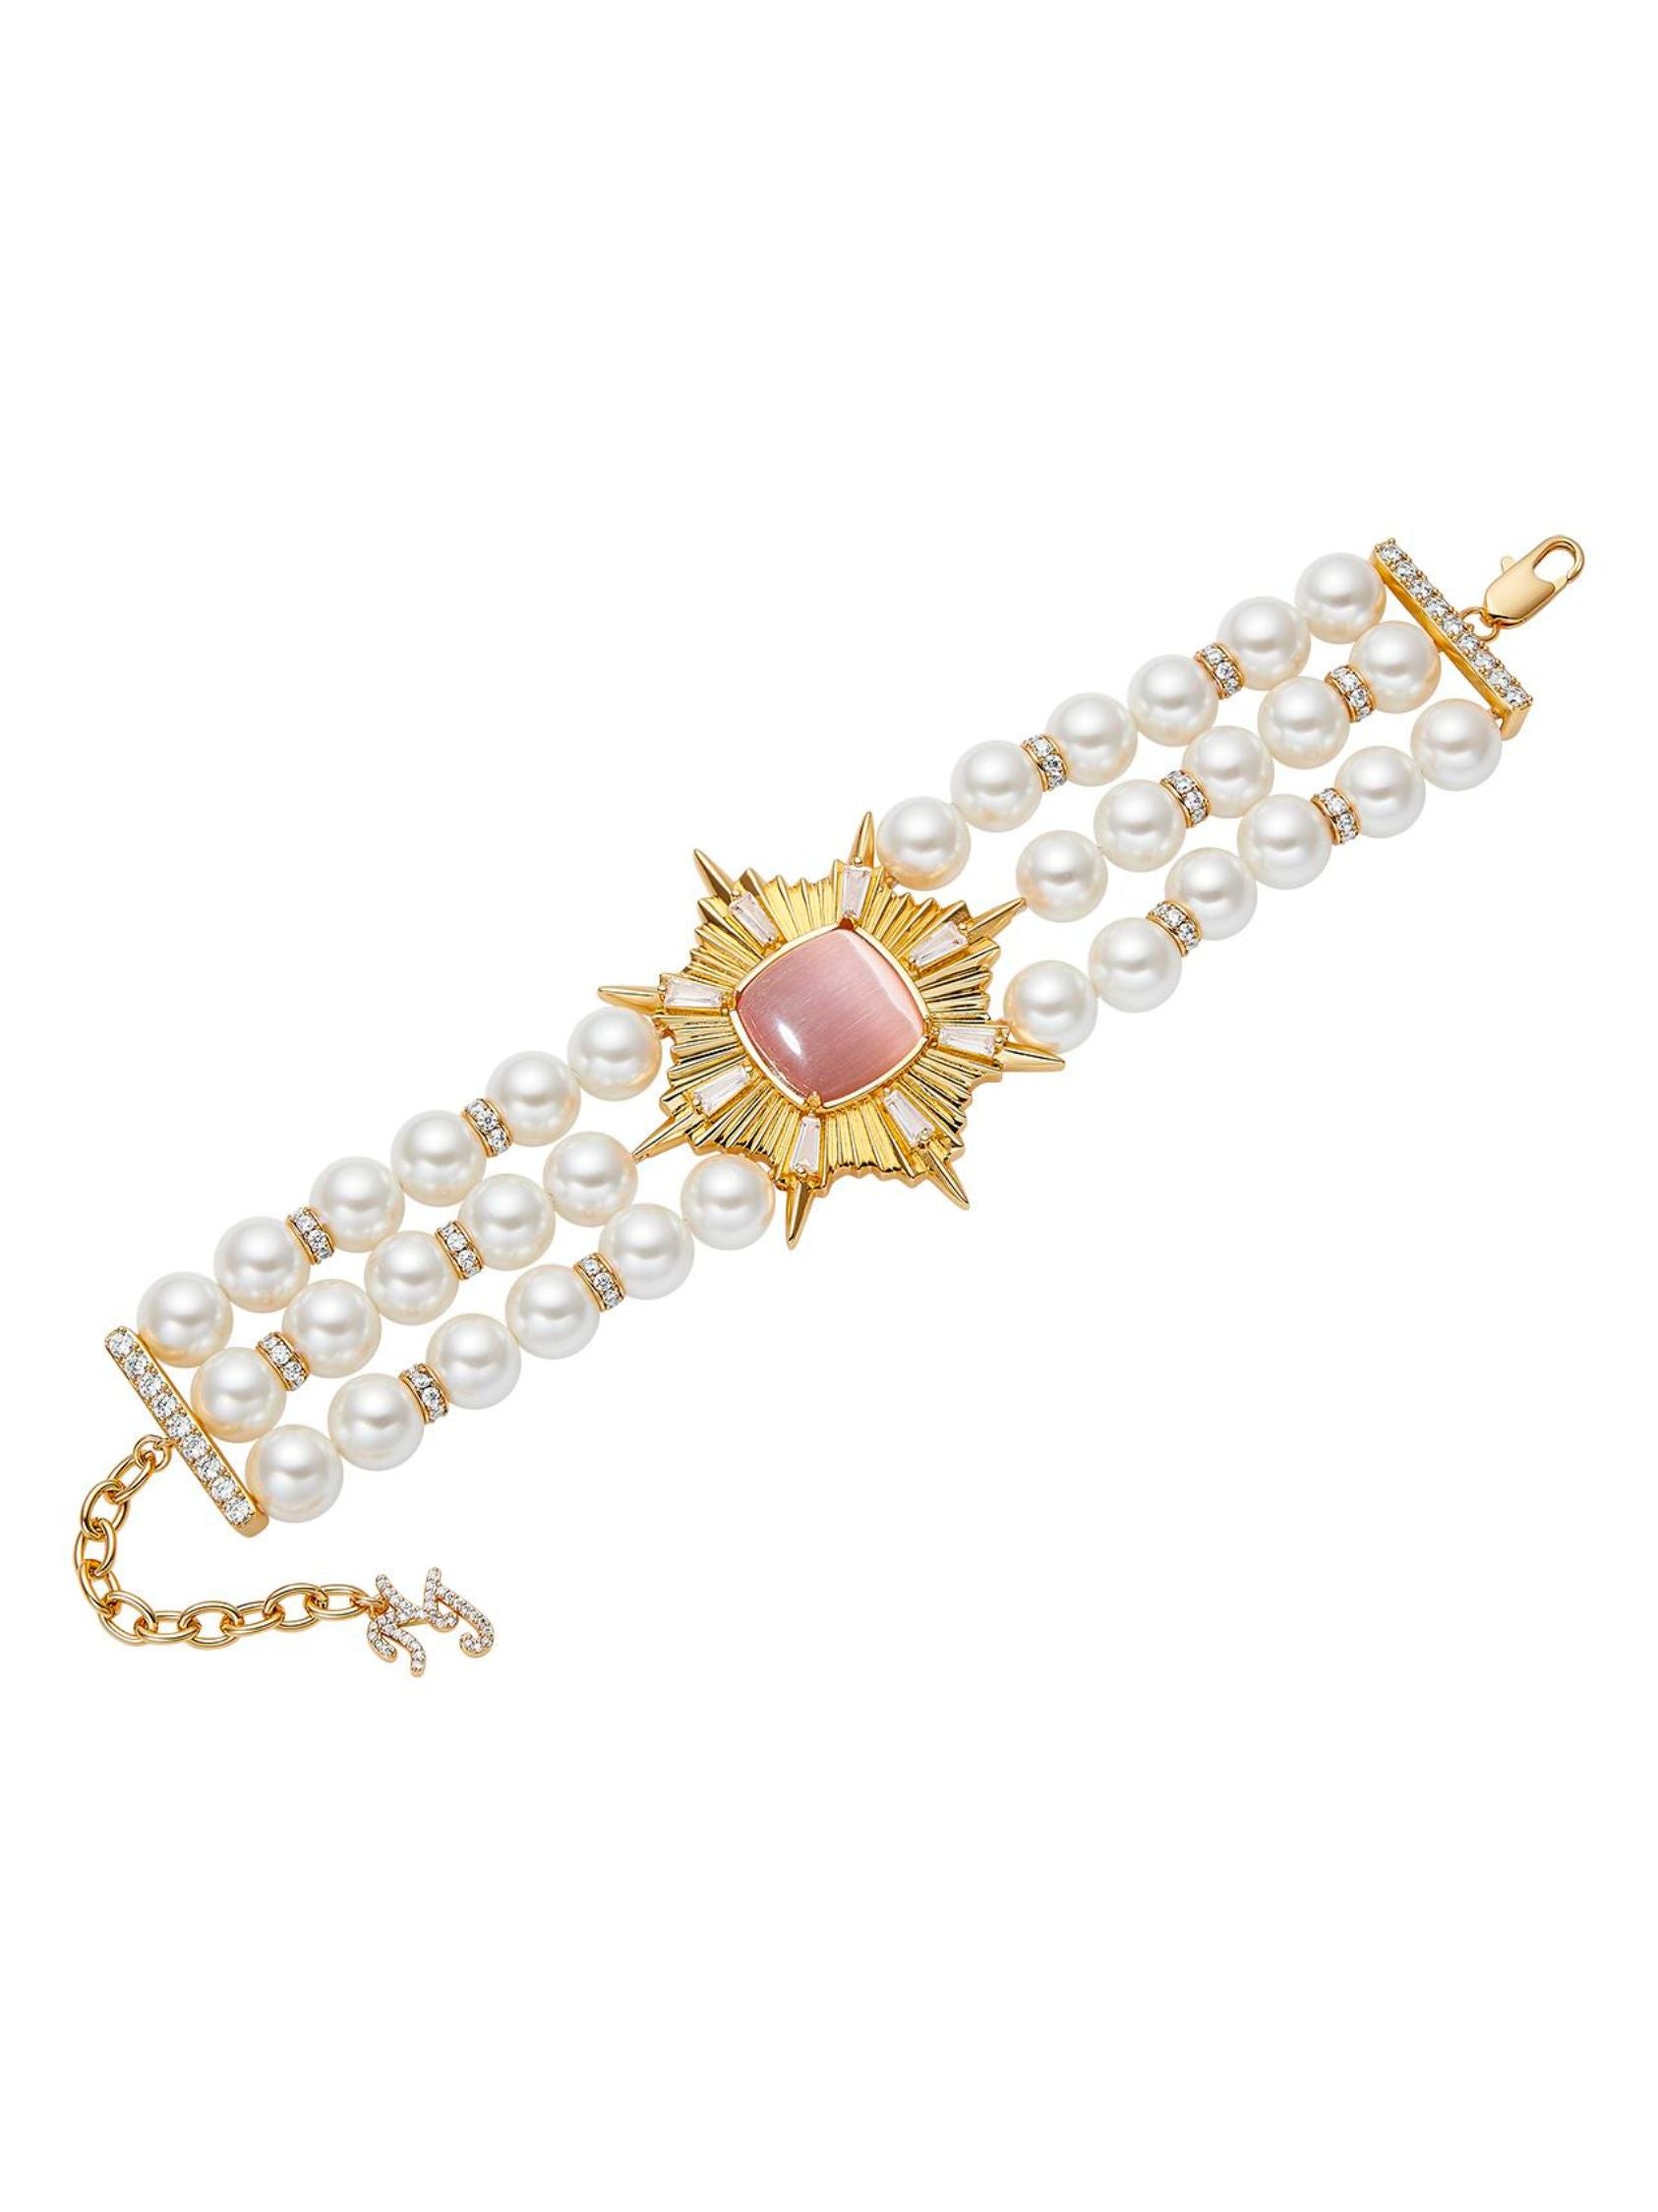 Pearl Bracelet Gold Clasp